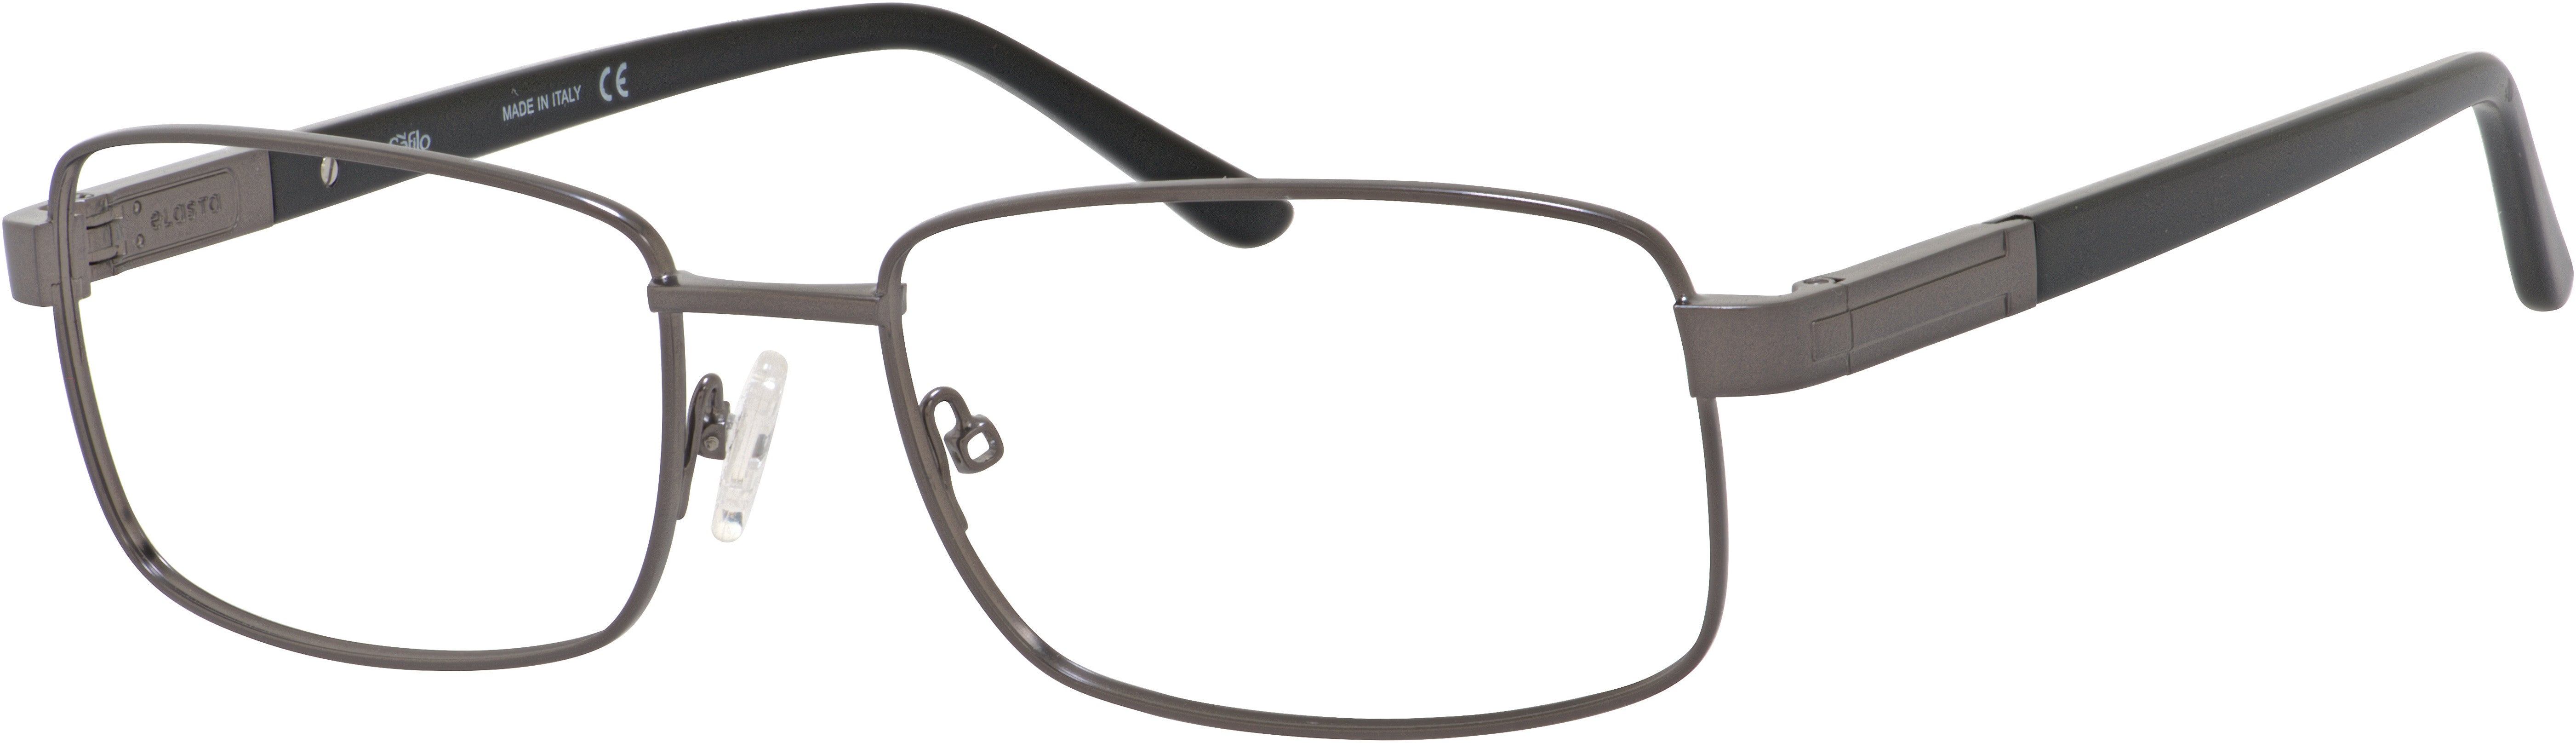  Elasta 3118 Rectangular Eyeglasses 06LB-06LB  Ruthenium (00 Demo Lens)